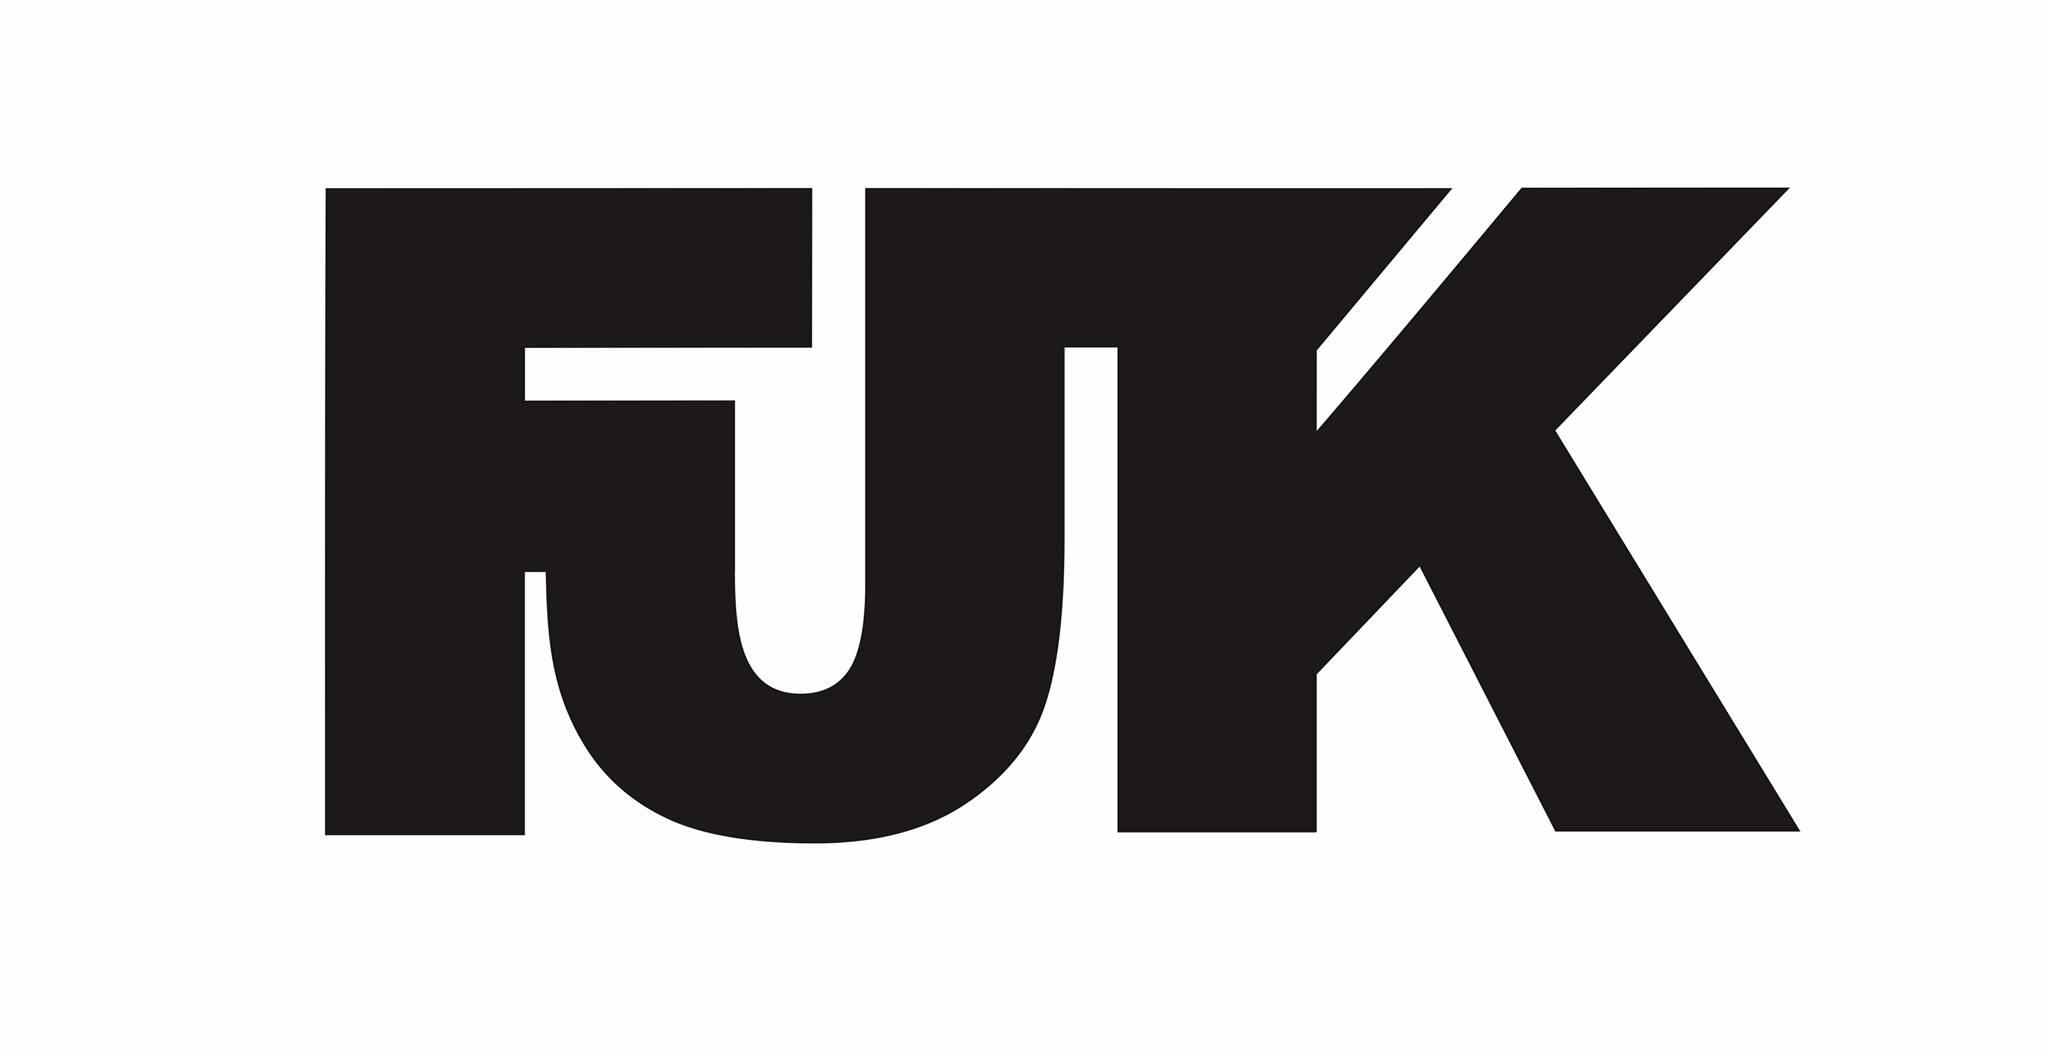 FJTK スマホ iPad タブレット 卓上 スタンド ホルダー 折り畳み式 アルミ製 角度調節 充電可能 滑り止め付き FJTK